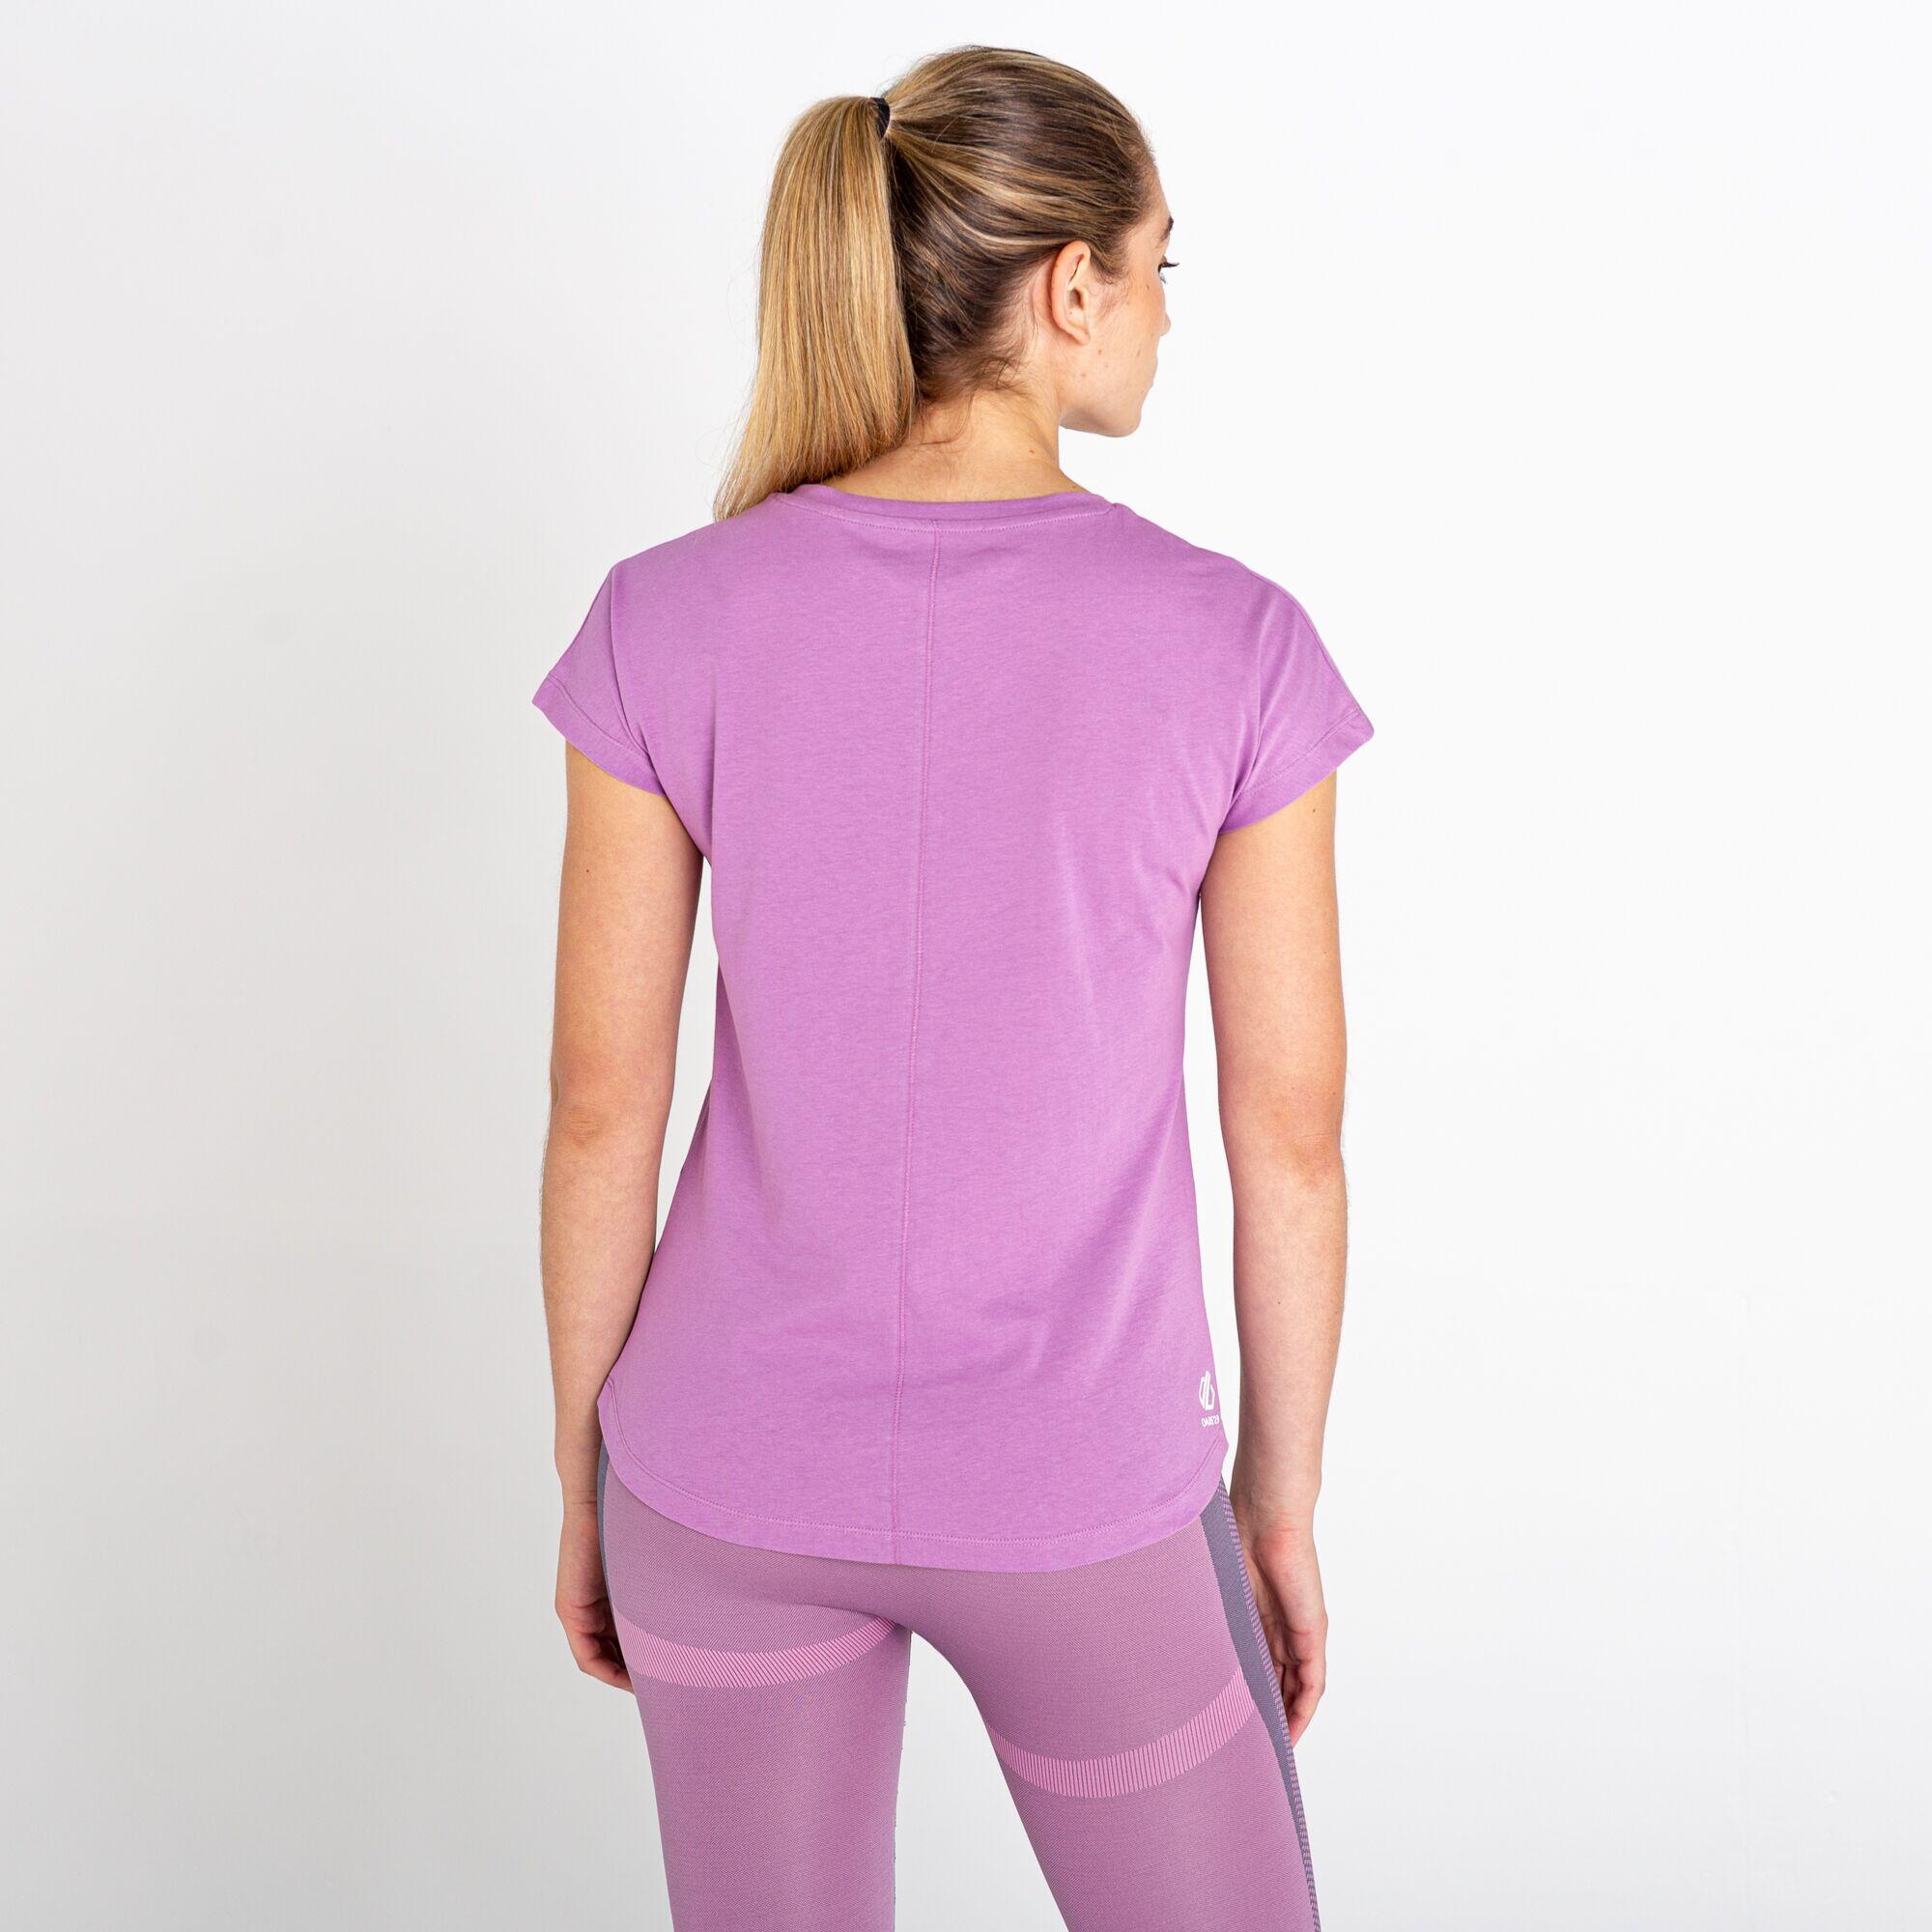 Moments II Women's Fitness Short Sleeve T-Shirt - Dusty Lavender 3/4